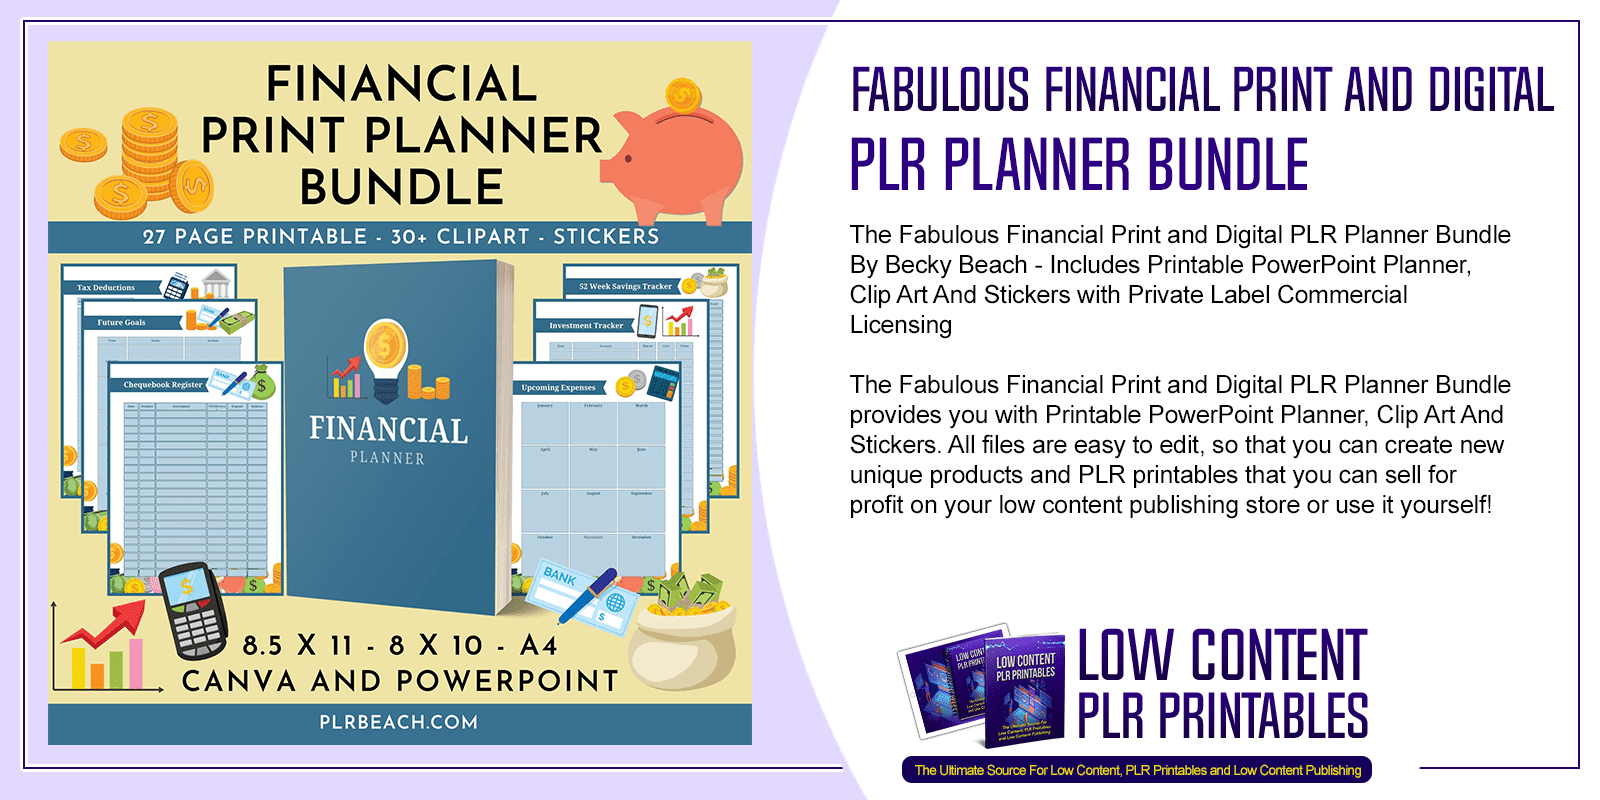 Fabulous Financial Print and Digital PLR Planner Bundle